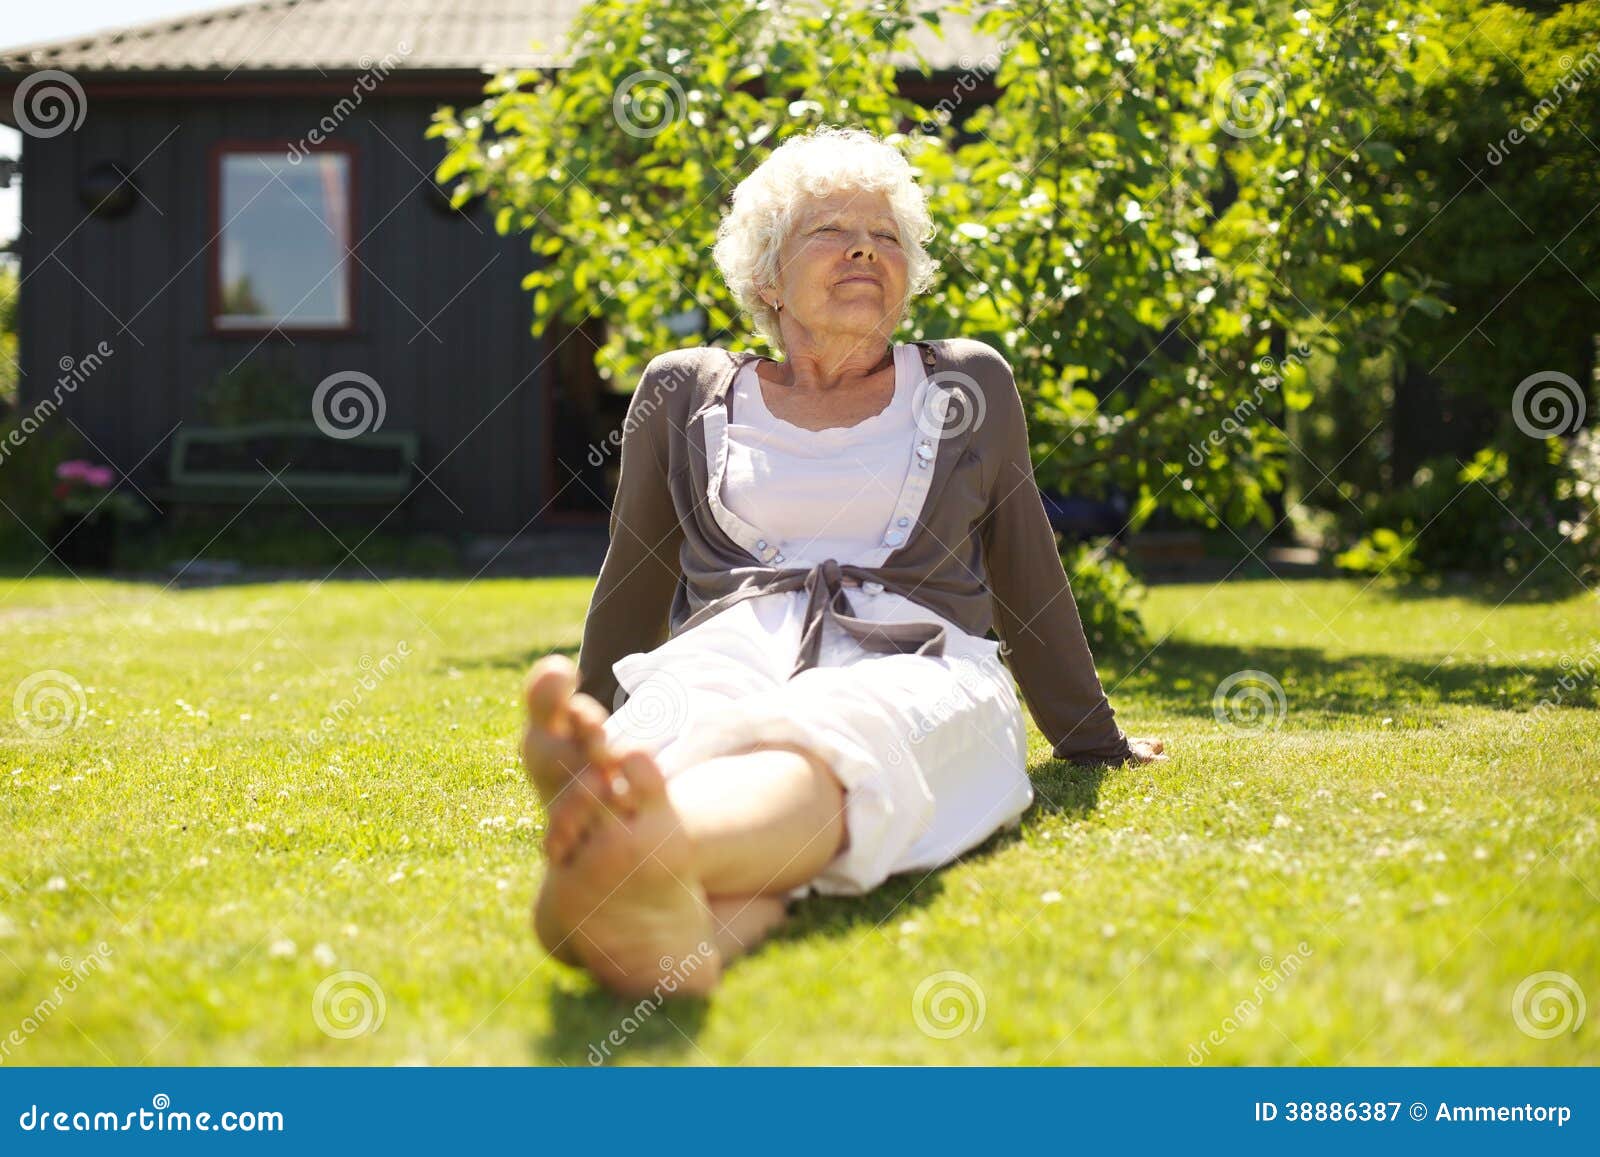 Senior Woman Enjoying The Fresh Air In Garden Stock Photo - Image: 38886387